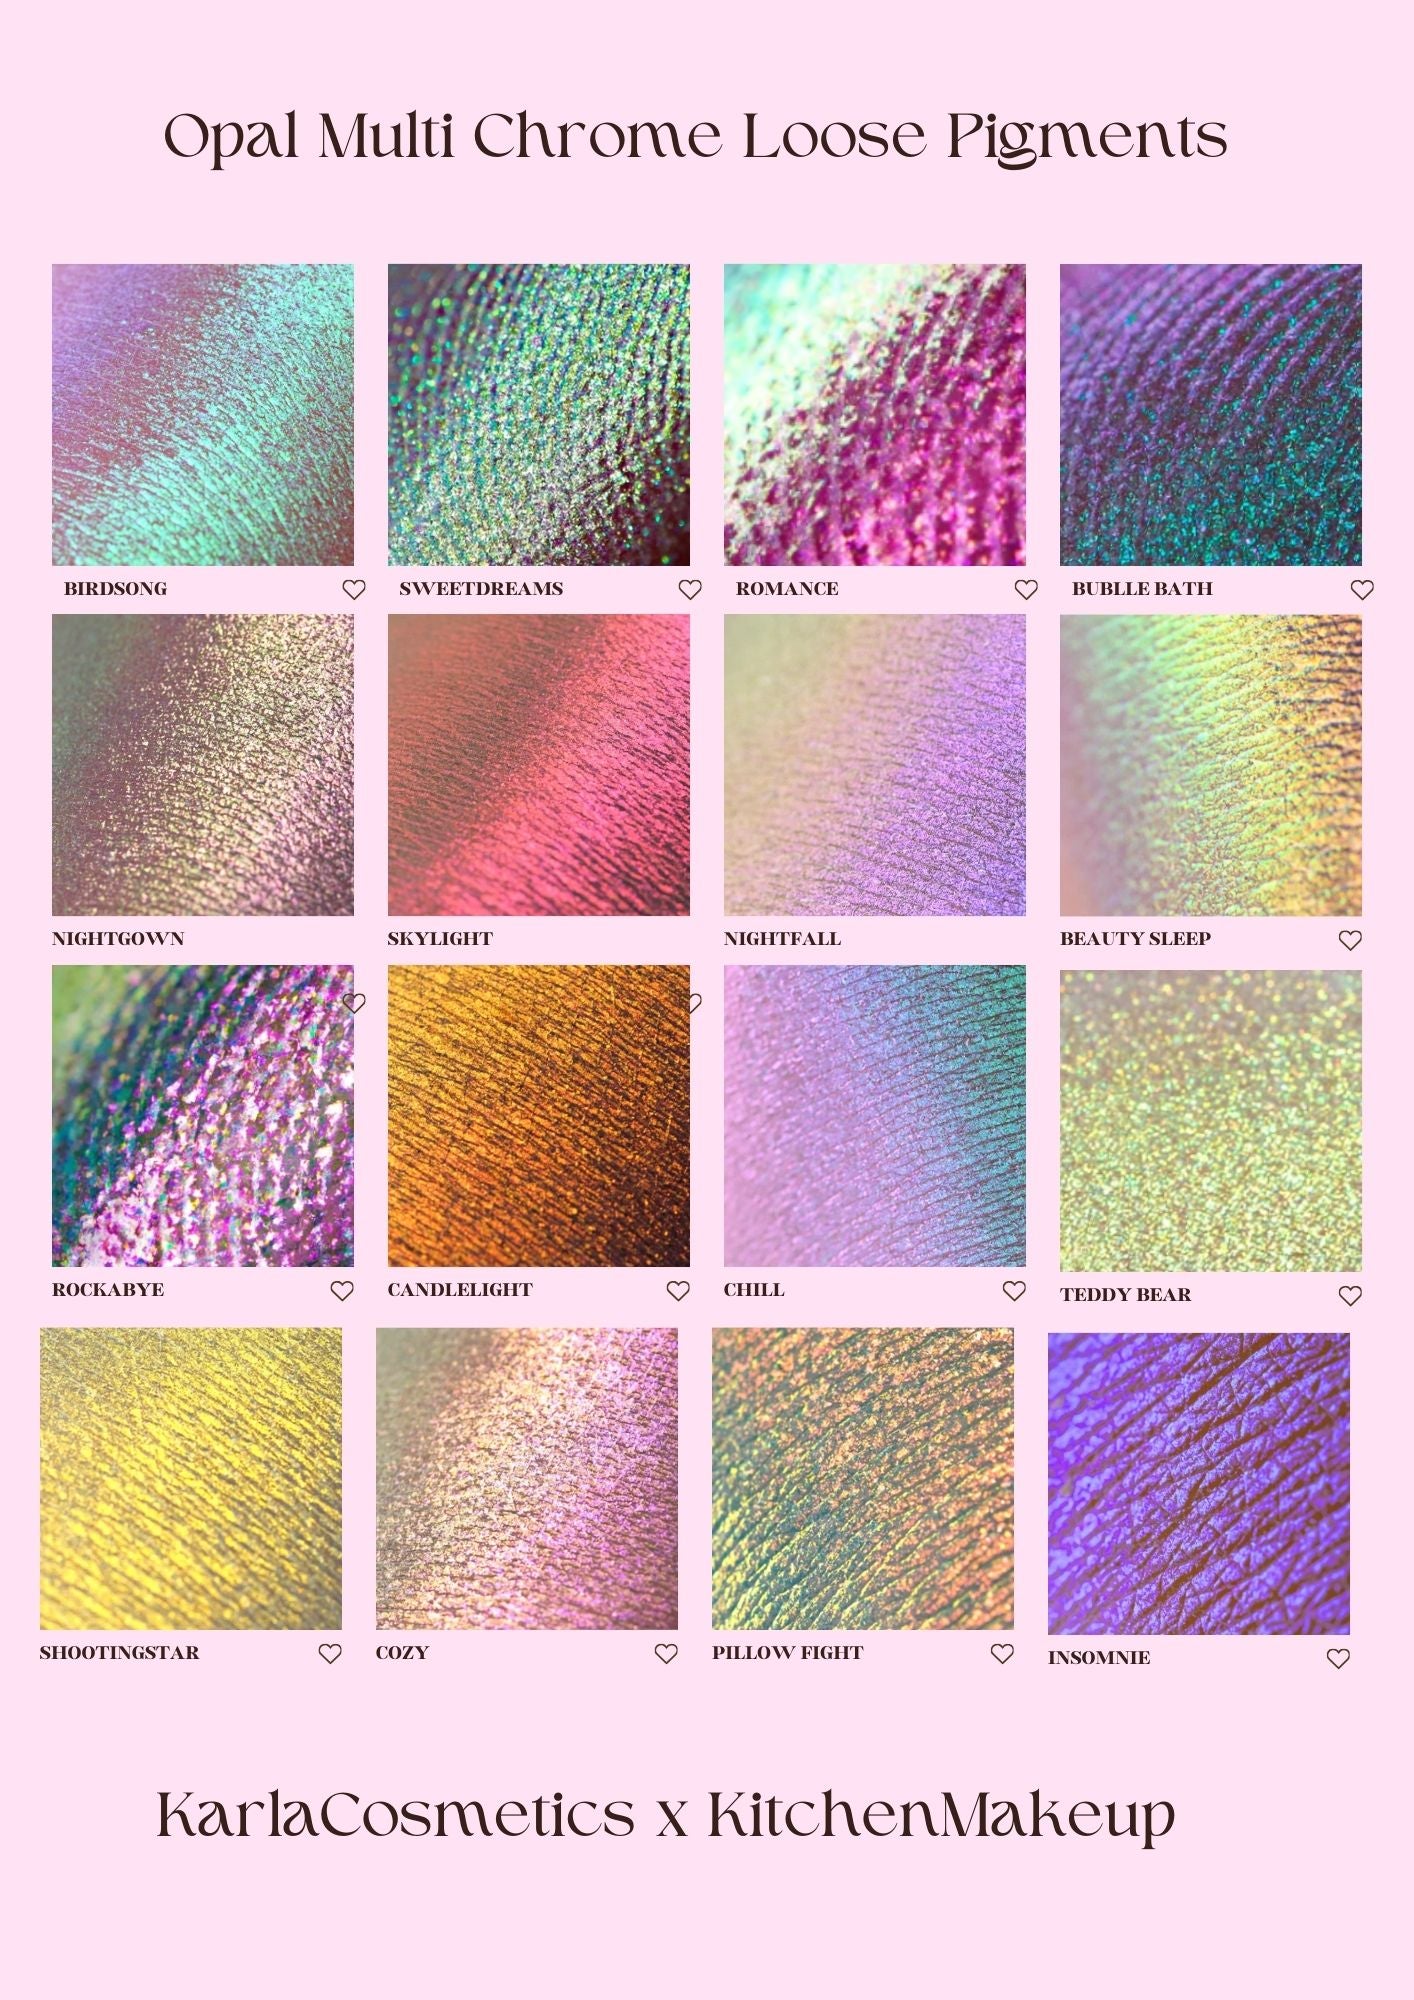 Opal Multi Chrome Loose Pigments - Karla Cosmetics